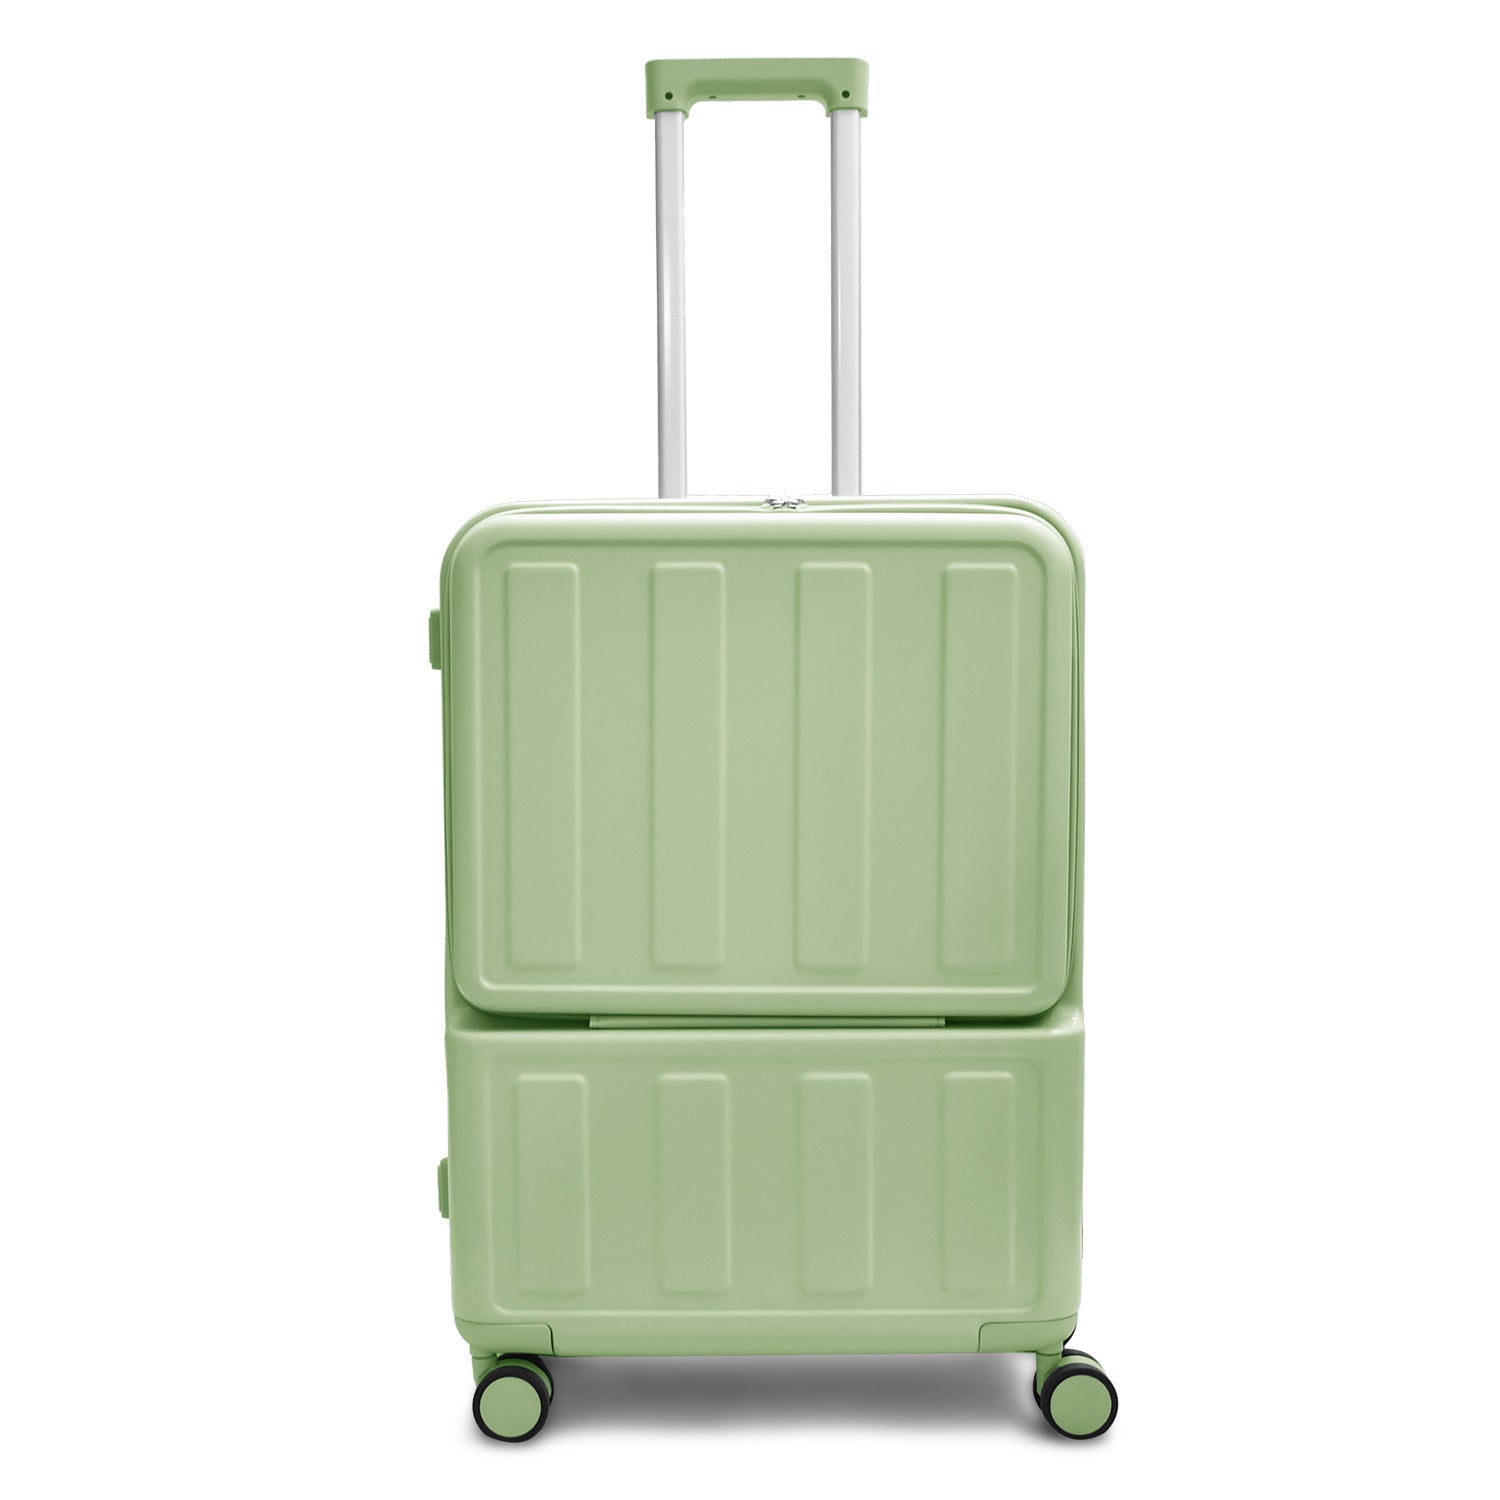 InnovateCarry Pro 26" Laptop Travel Luggage